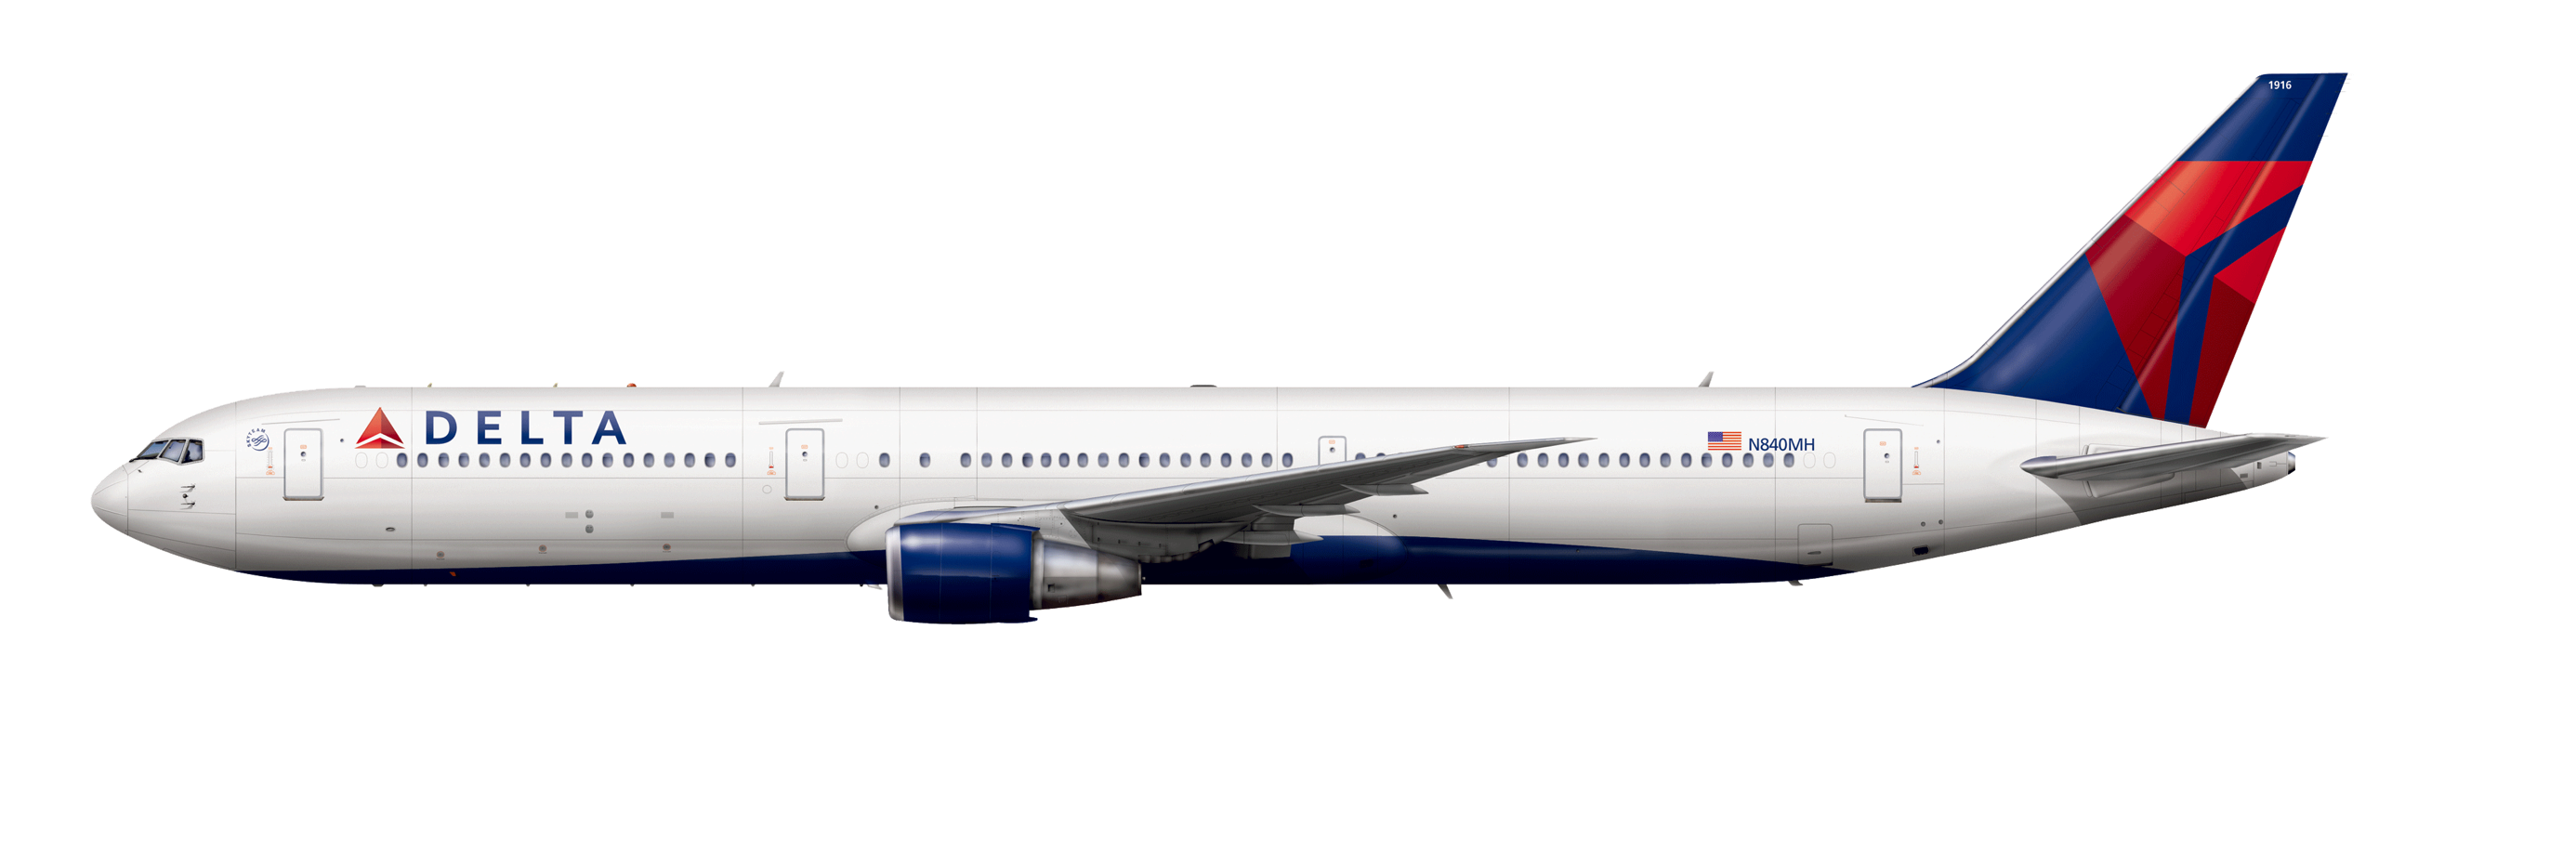 Boeing 767 400er Aircraft Seat Maps Specs Amenities